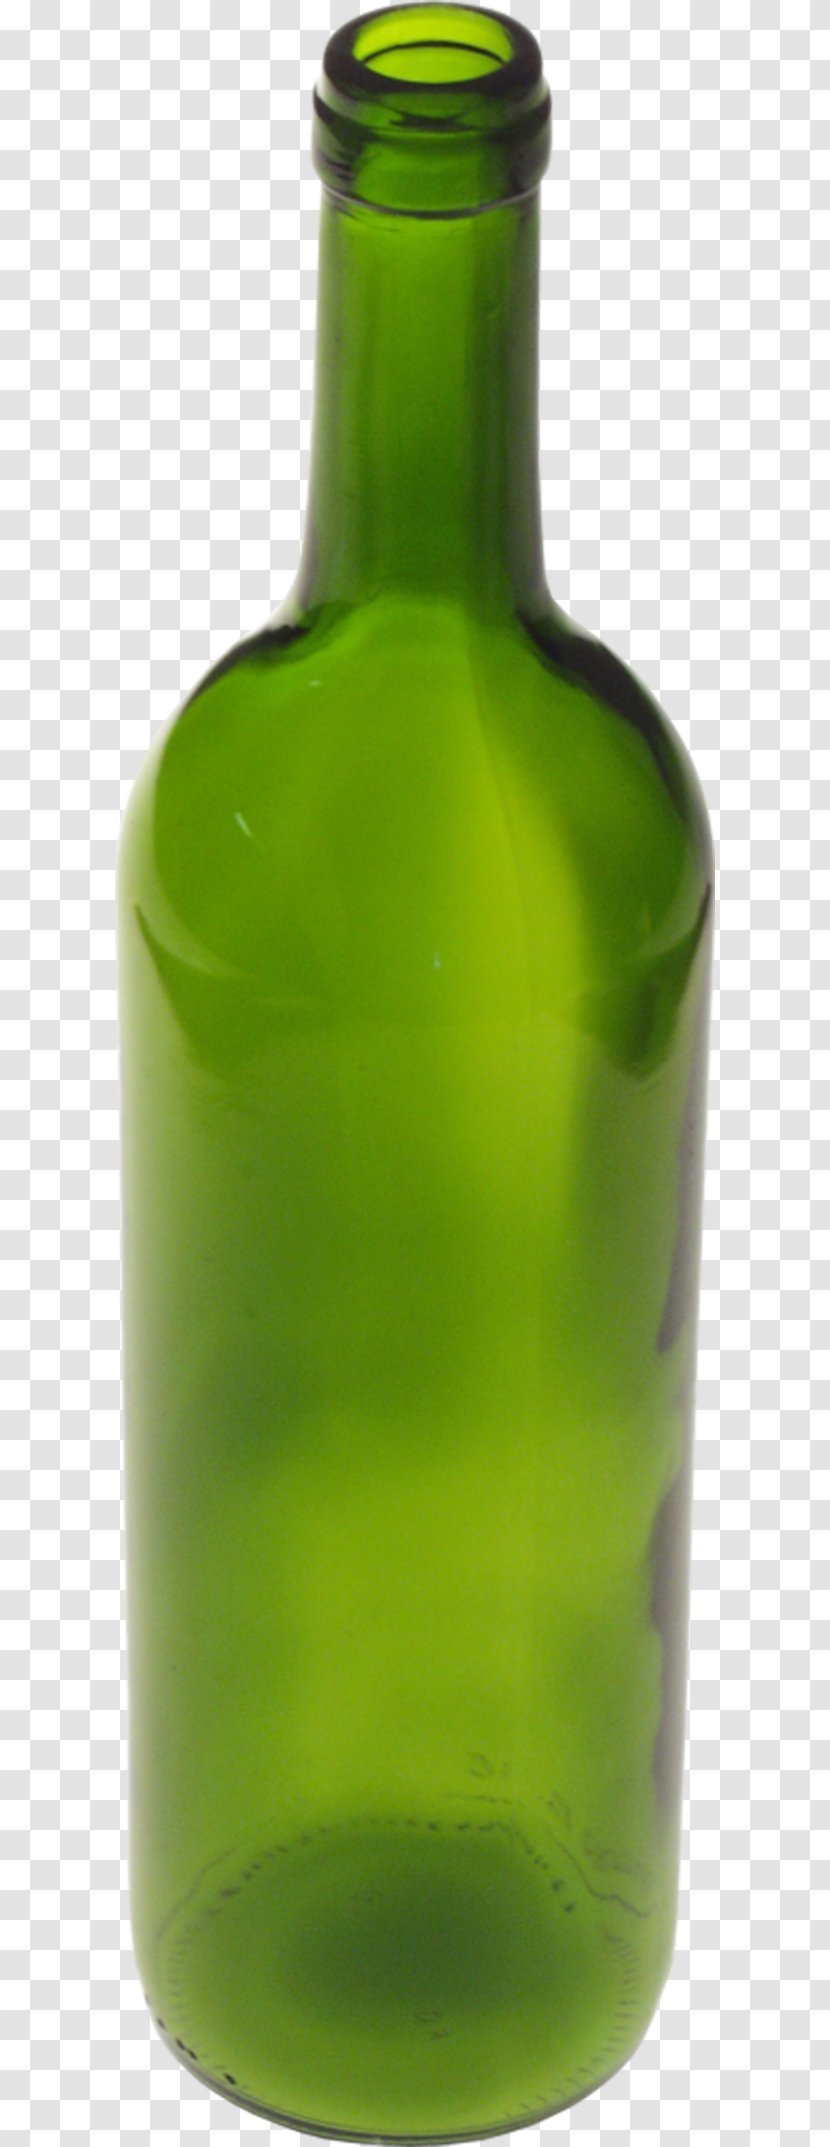 Wine Glass Bottle Clip Art - Artifact - Beer Bottles Transparent PNG